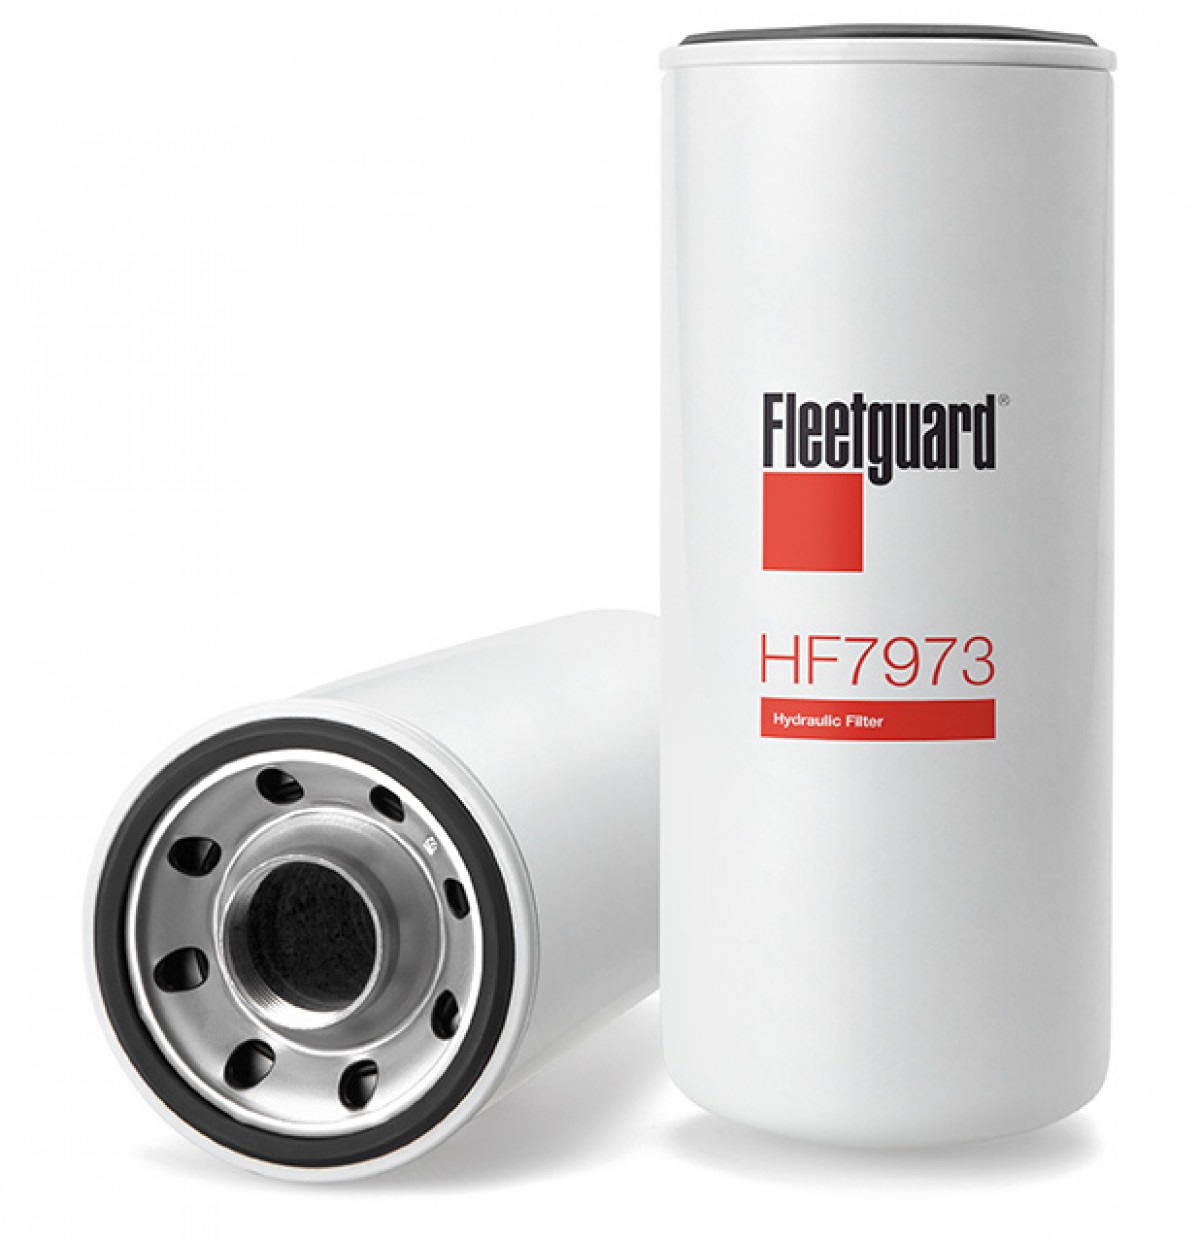 Filtr hydrauliczny  HF 7973 do FOREDIL 23.14